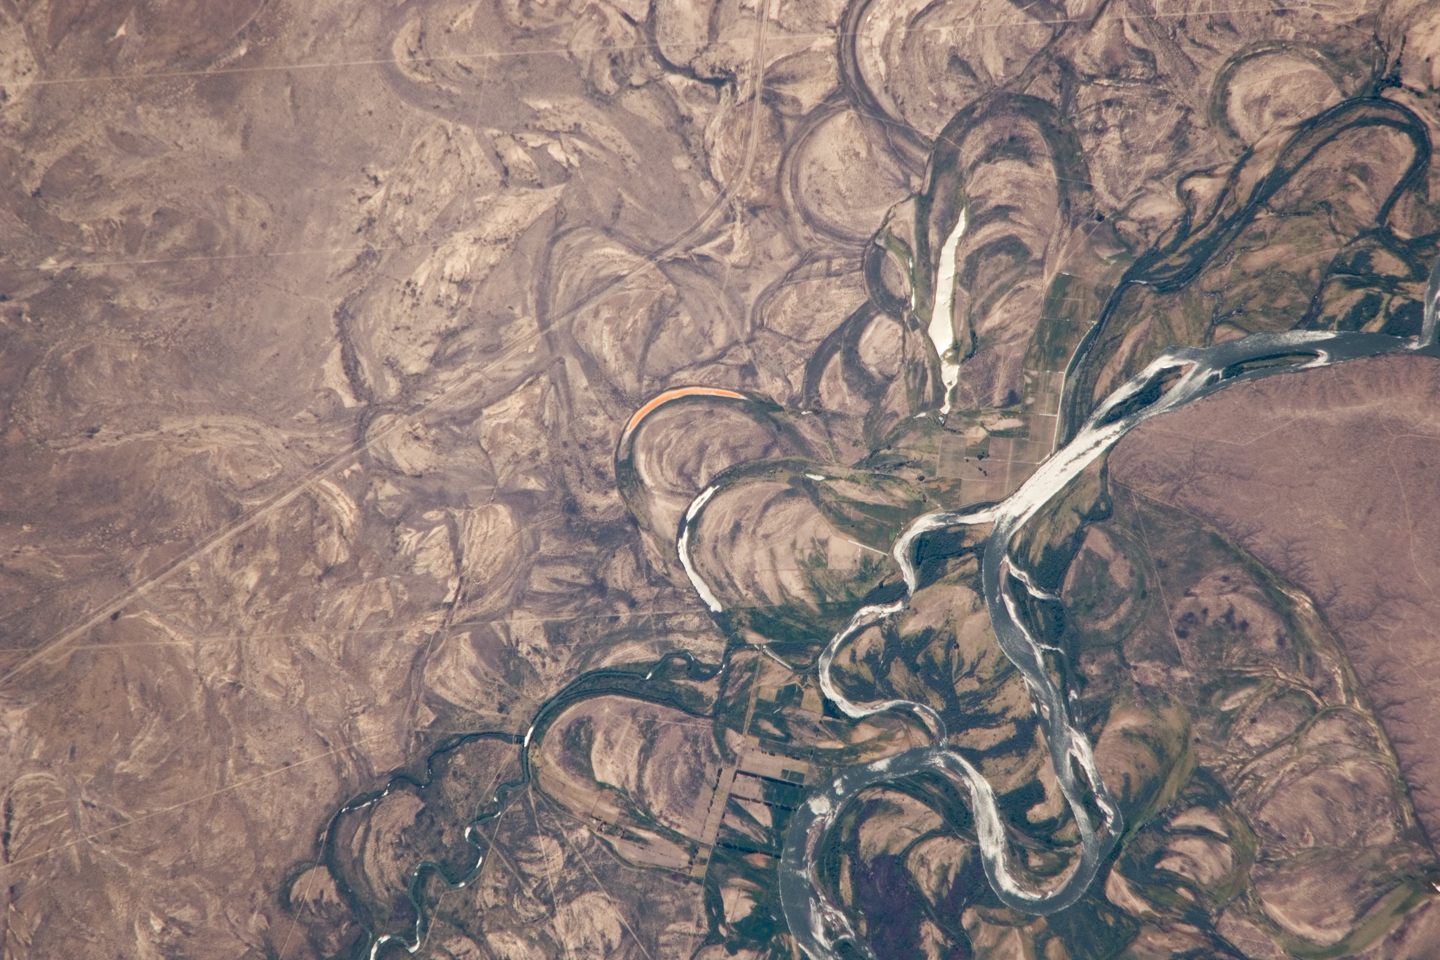 Rio Negro Floodplain, Patagonia, Argentina - related image preview